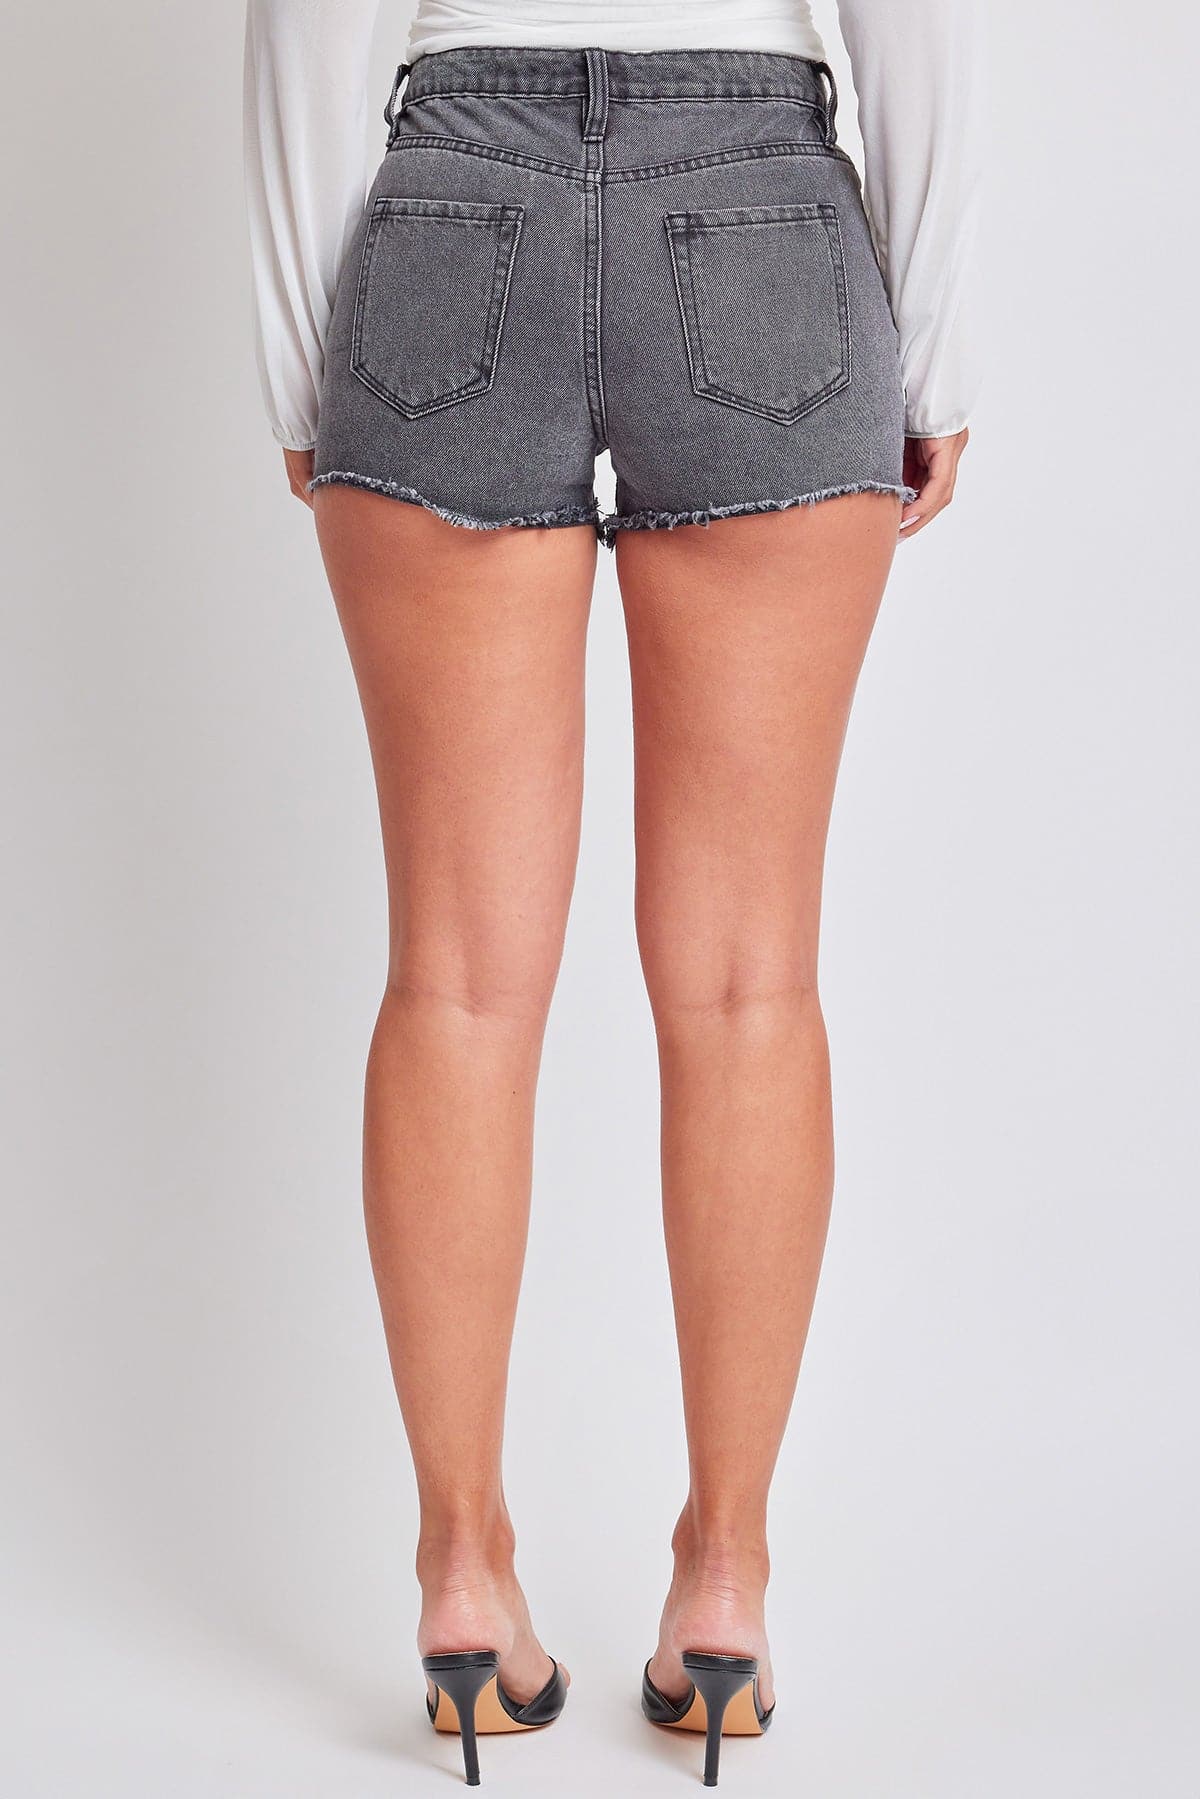 Women's Summer Denim Shorts